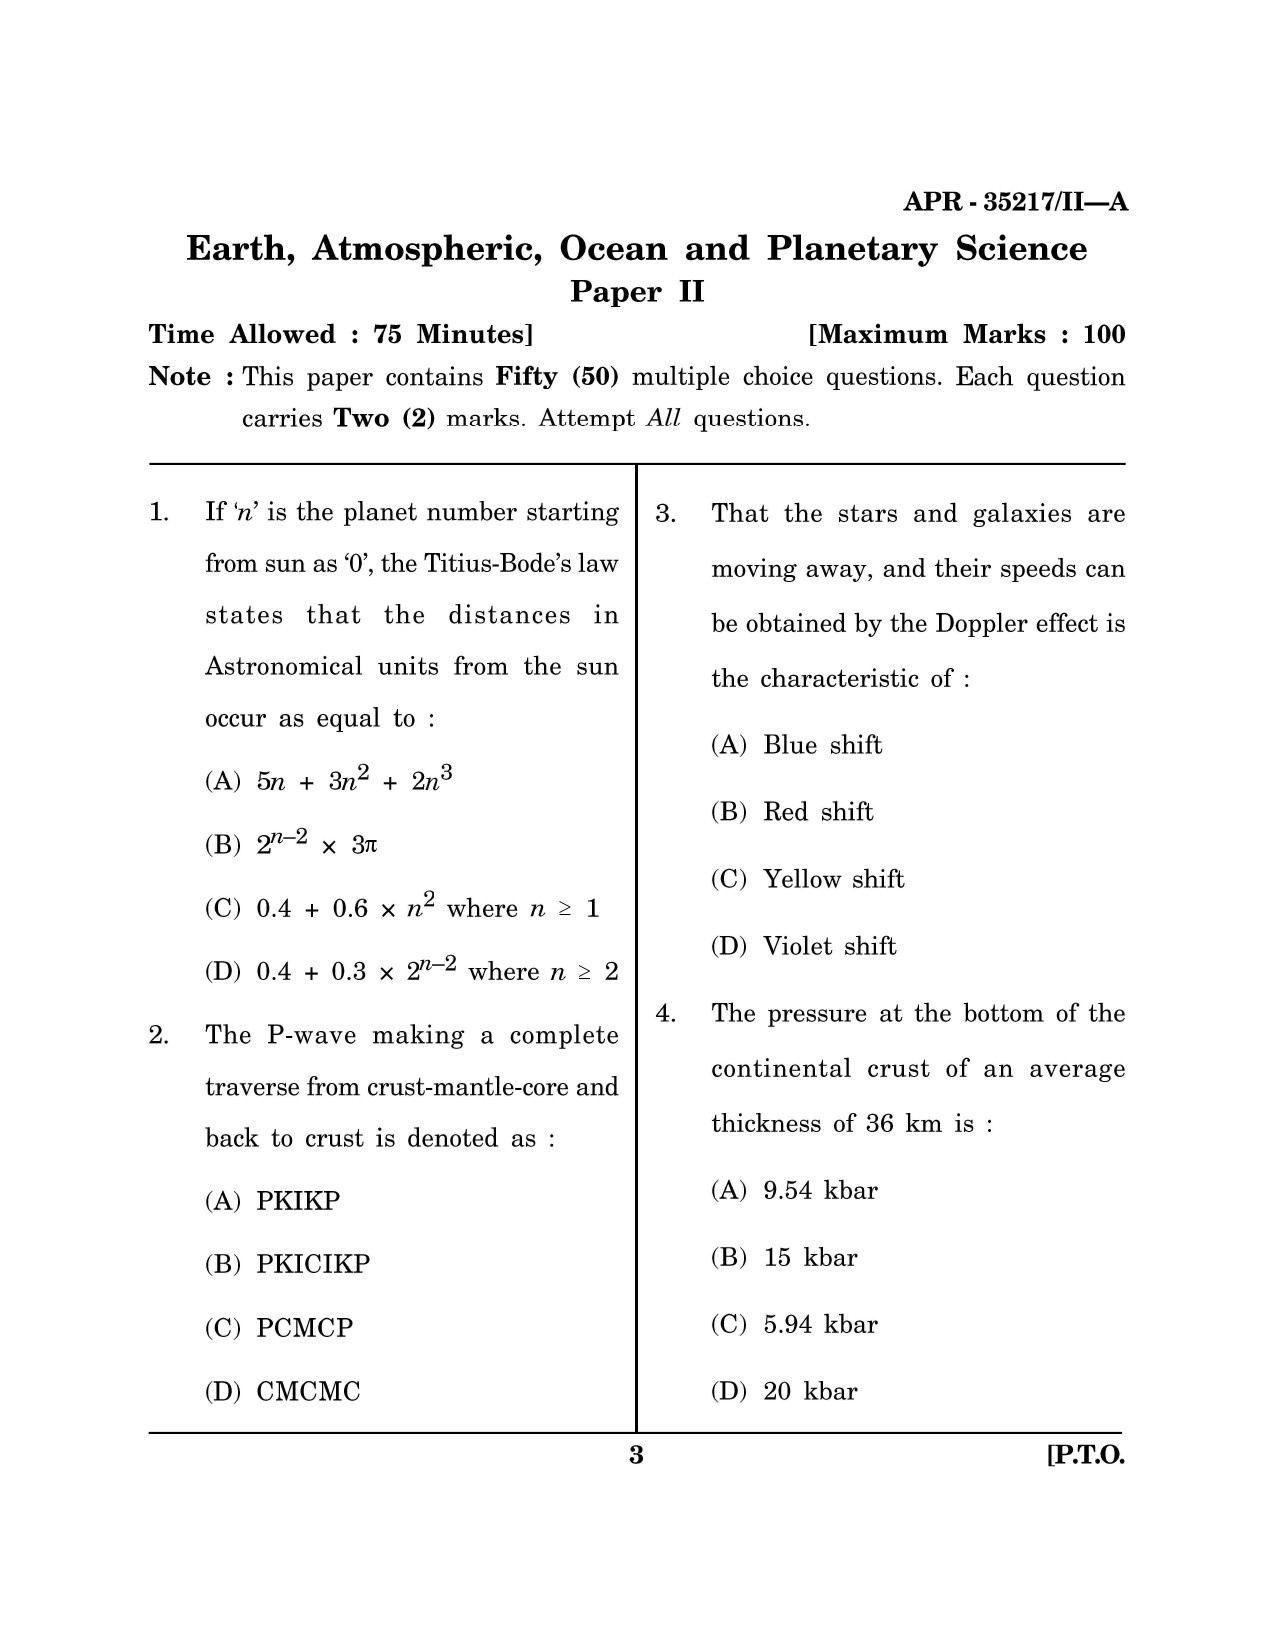 Maharashtra SET Earth Atmospheric Ocean Planetary Science Question Paper II April 2017 2